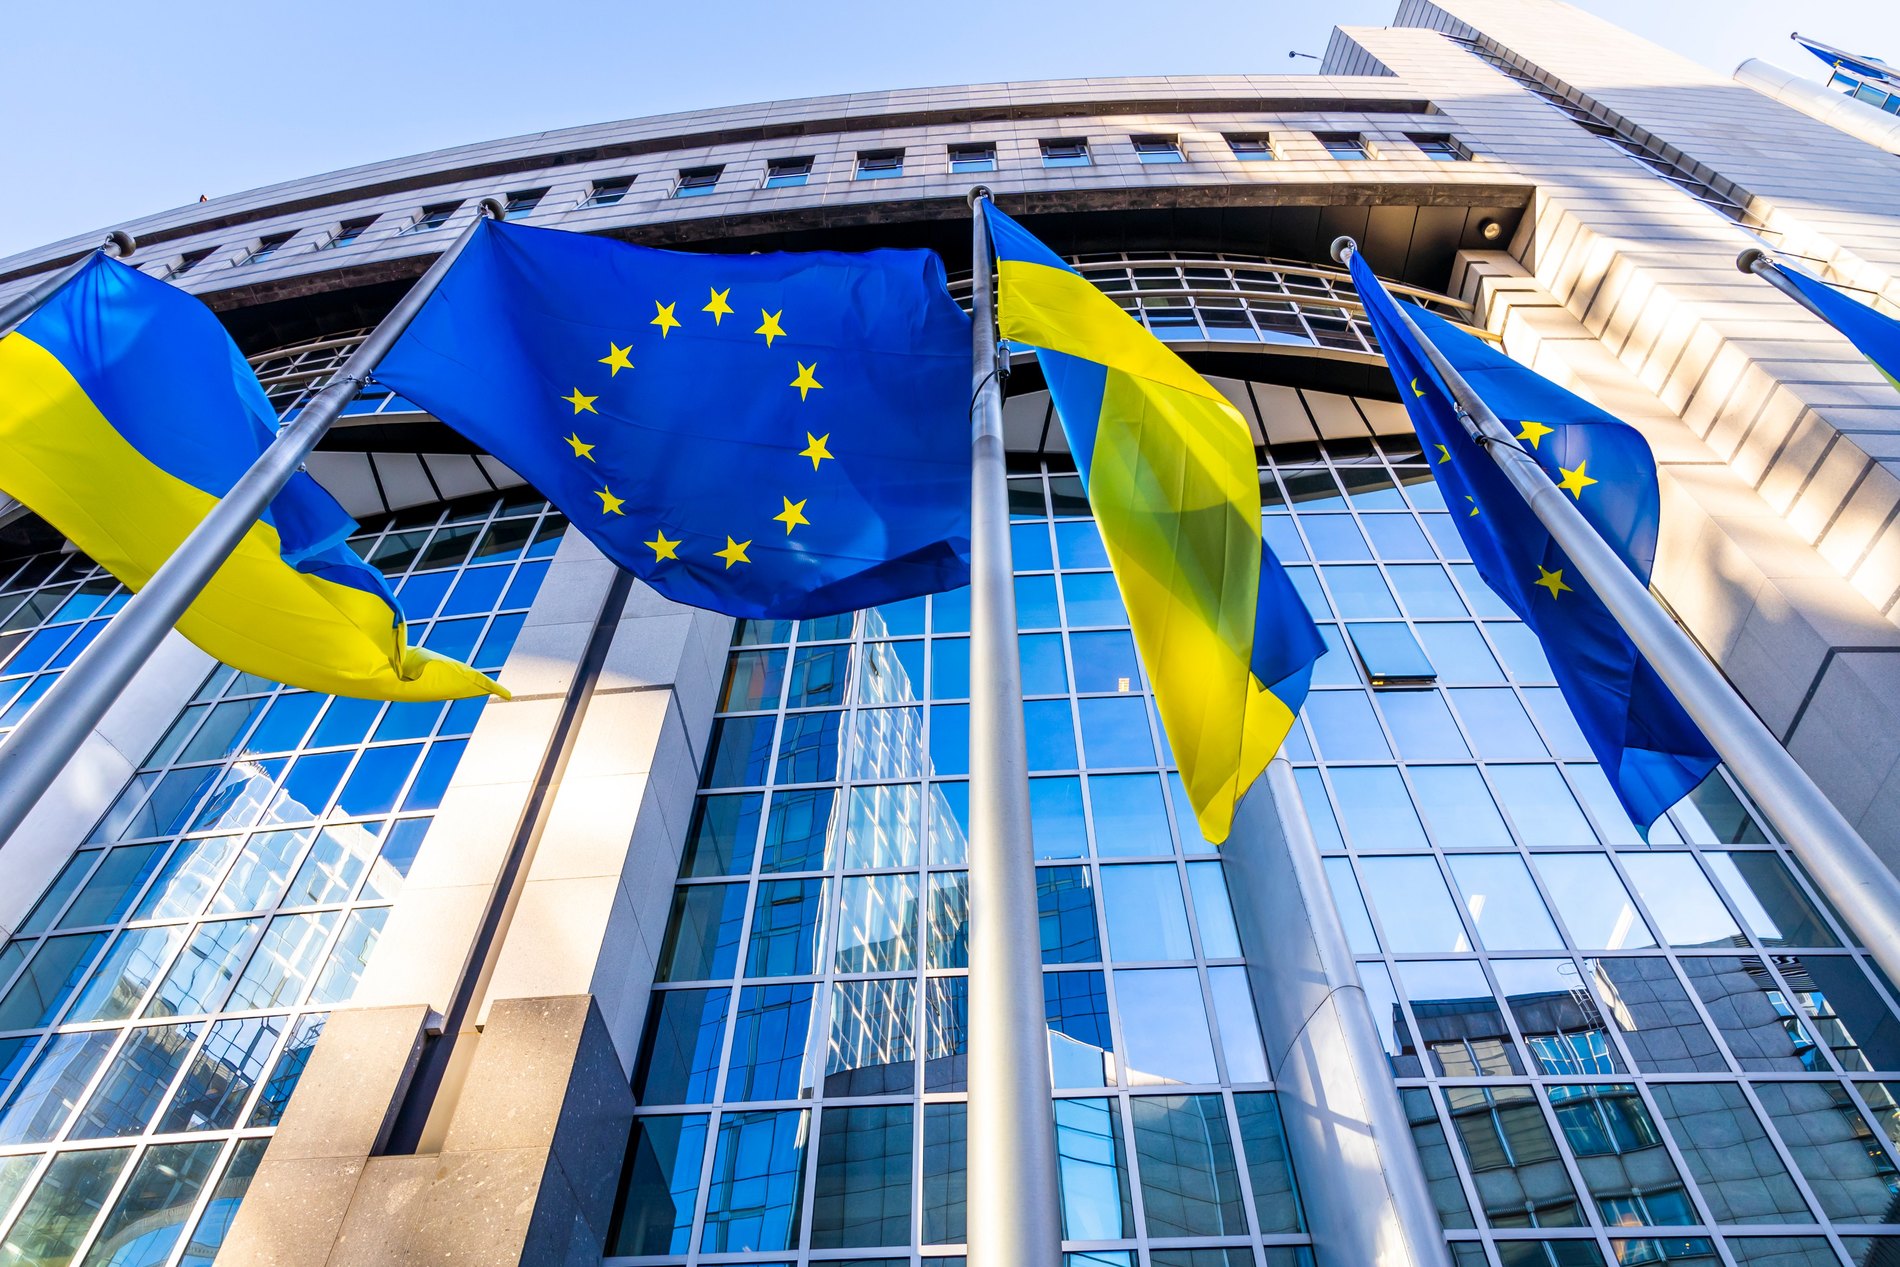 Ukraine received EUR 4.5 billion from the European Commission